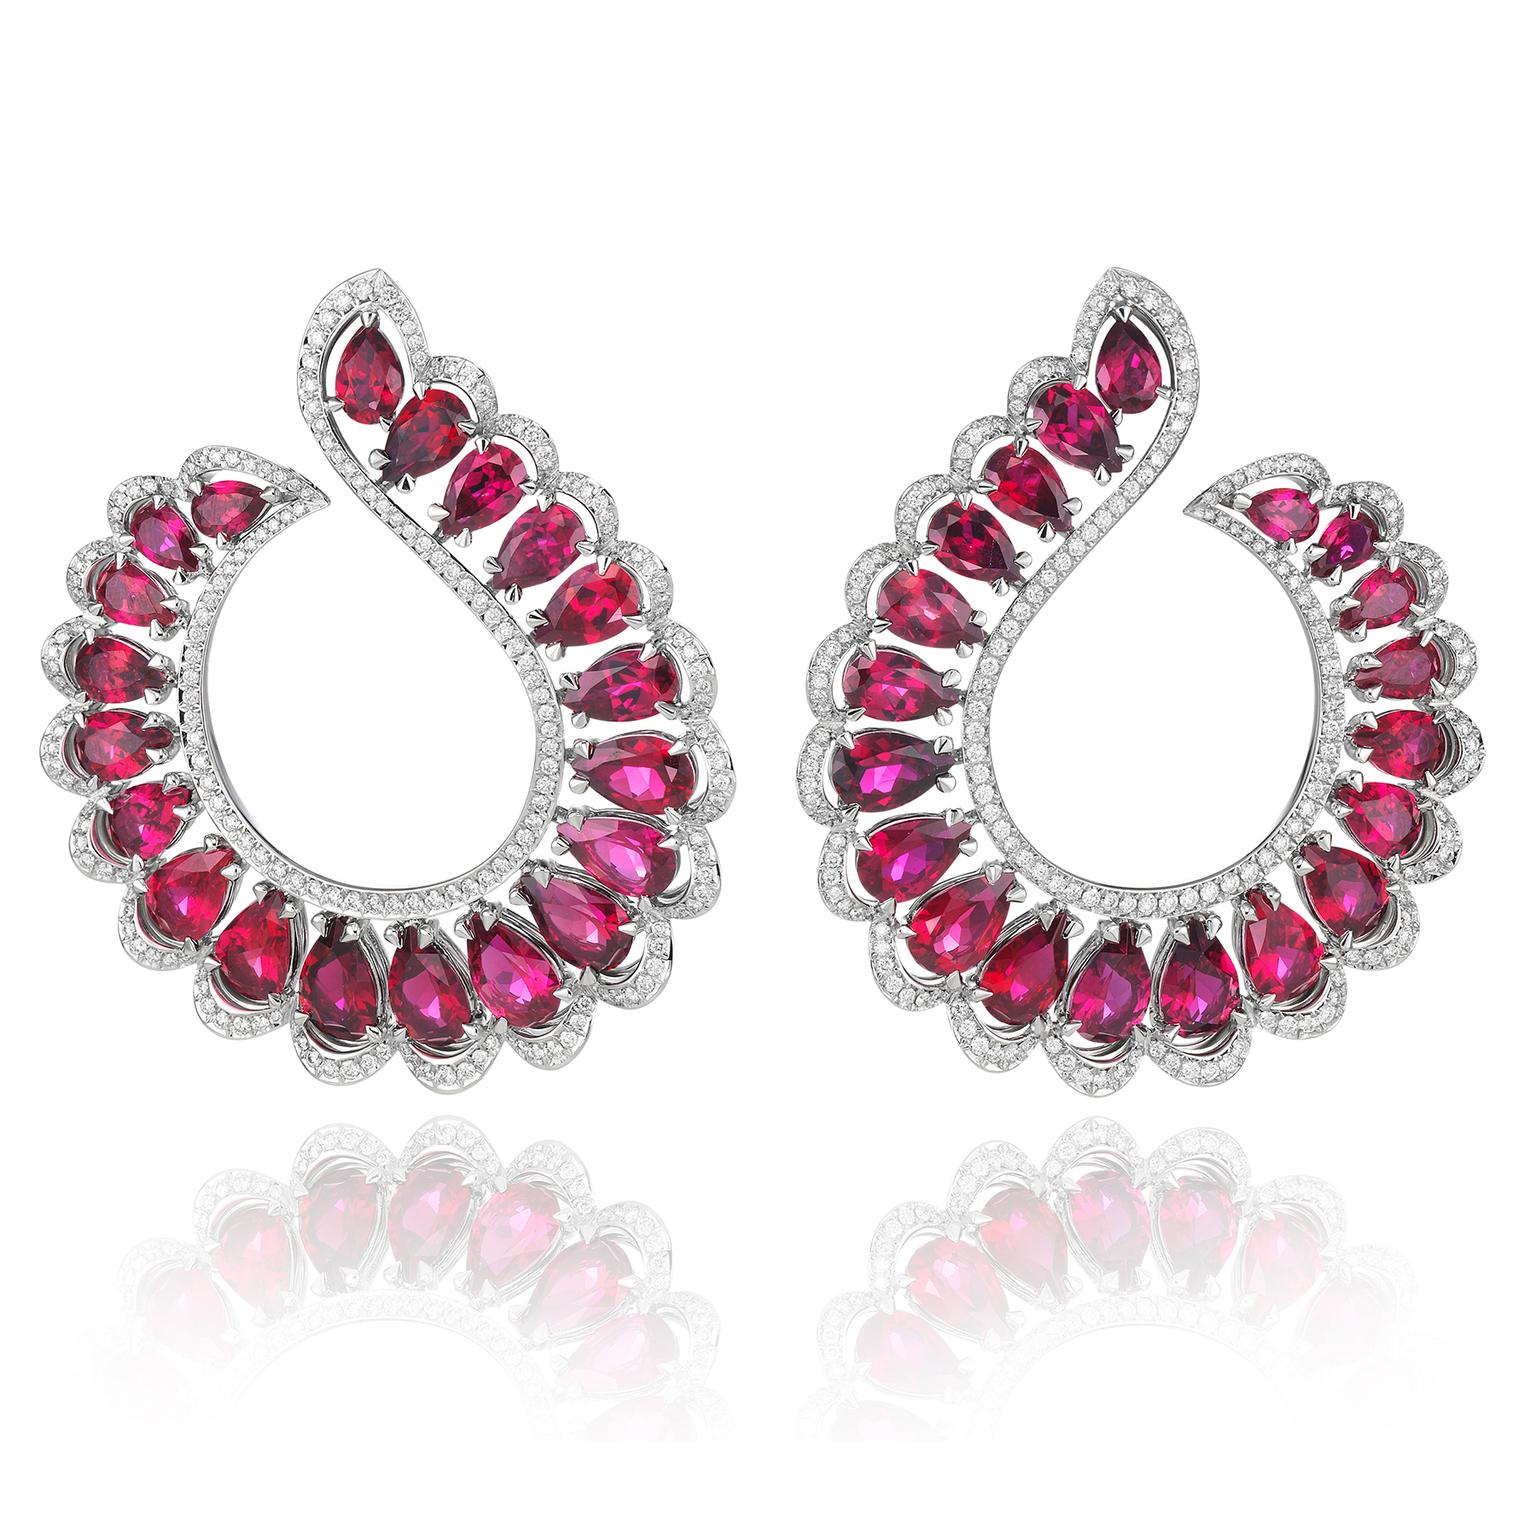 Chopard Precious pear-shaped ruby earrings